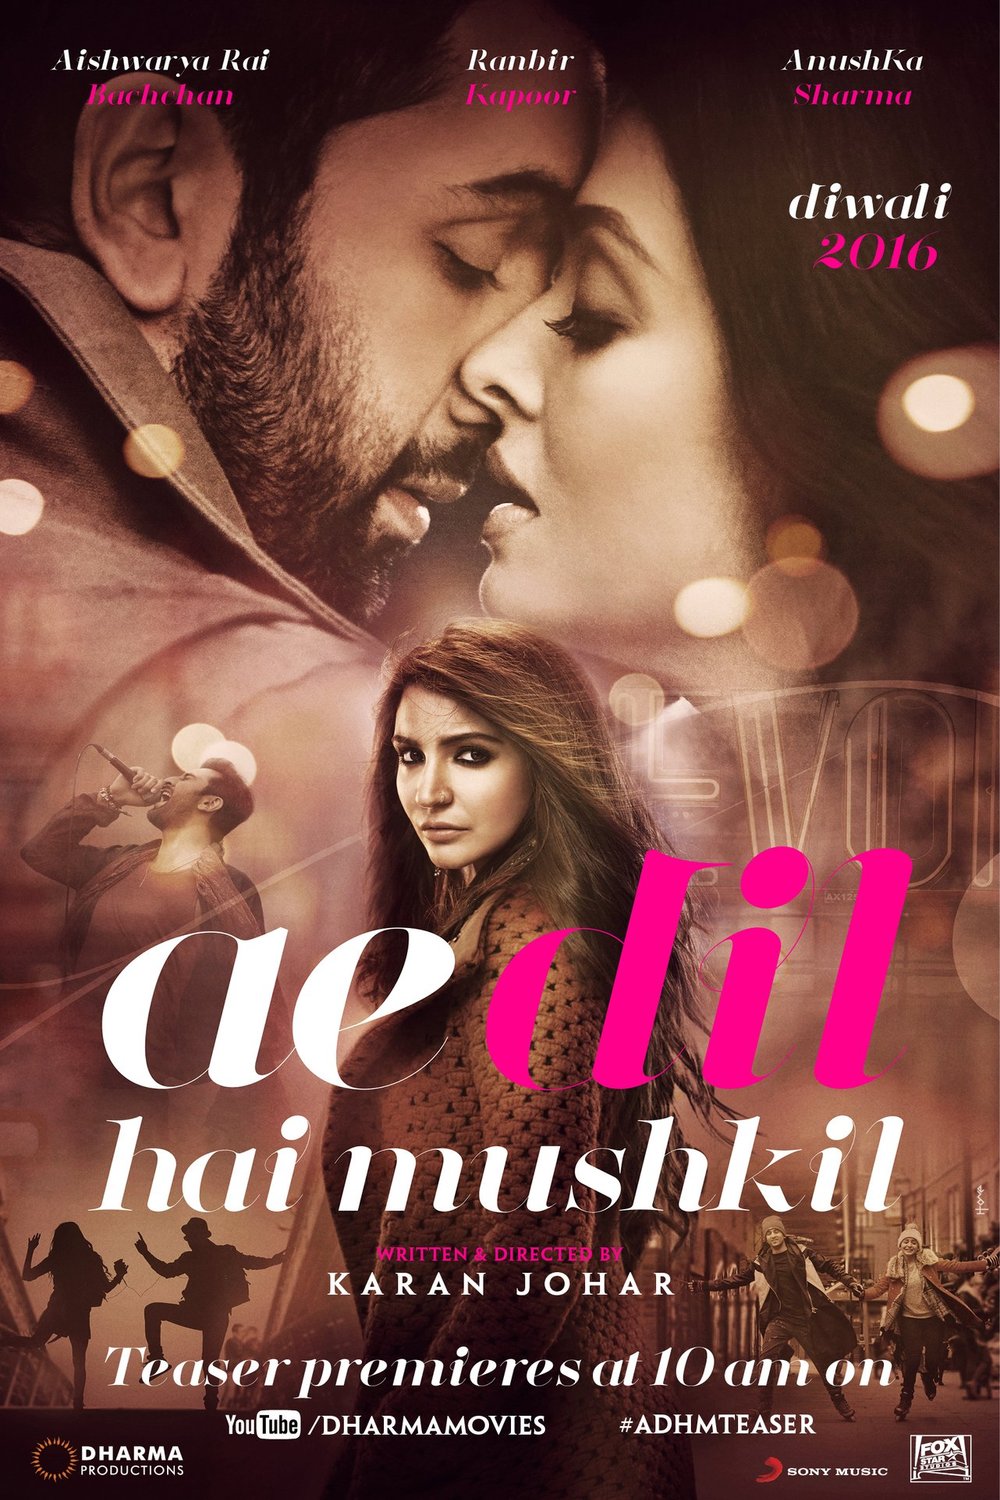 Poster of the movie Ae Dil Hai Mushkil